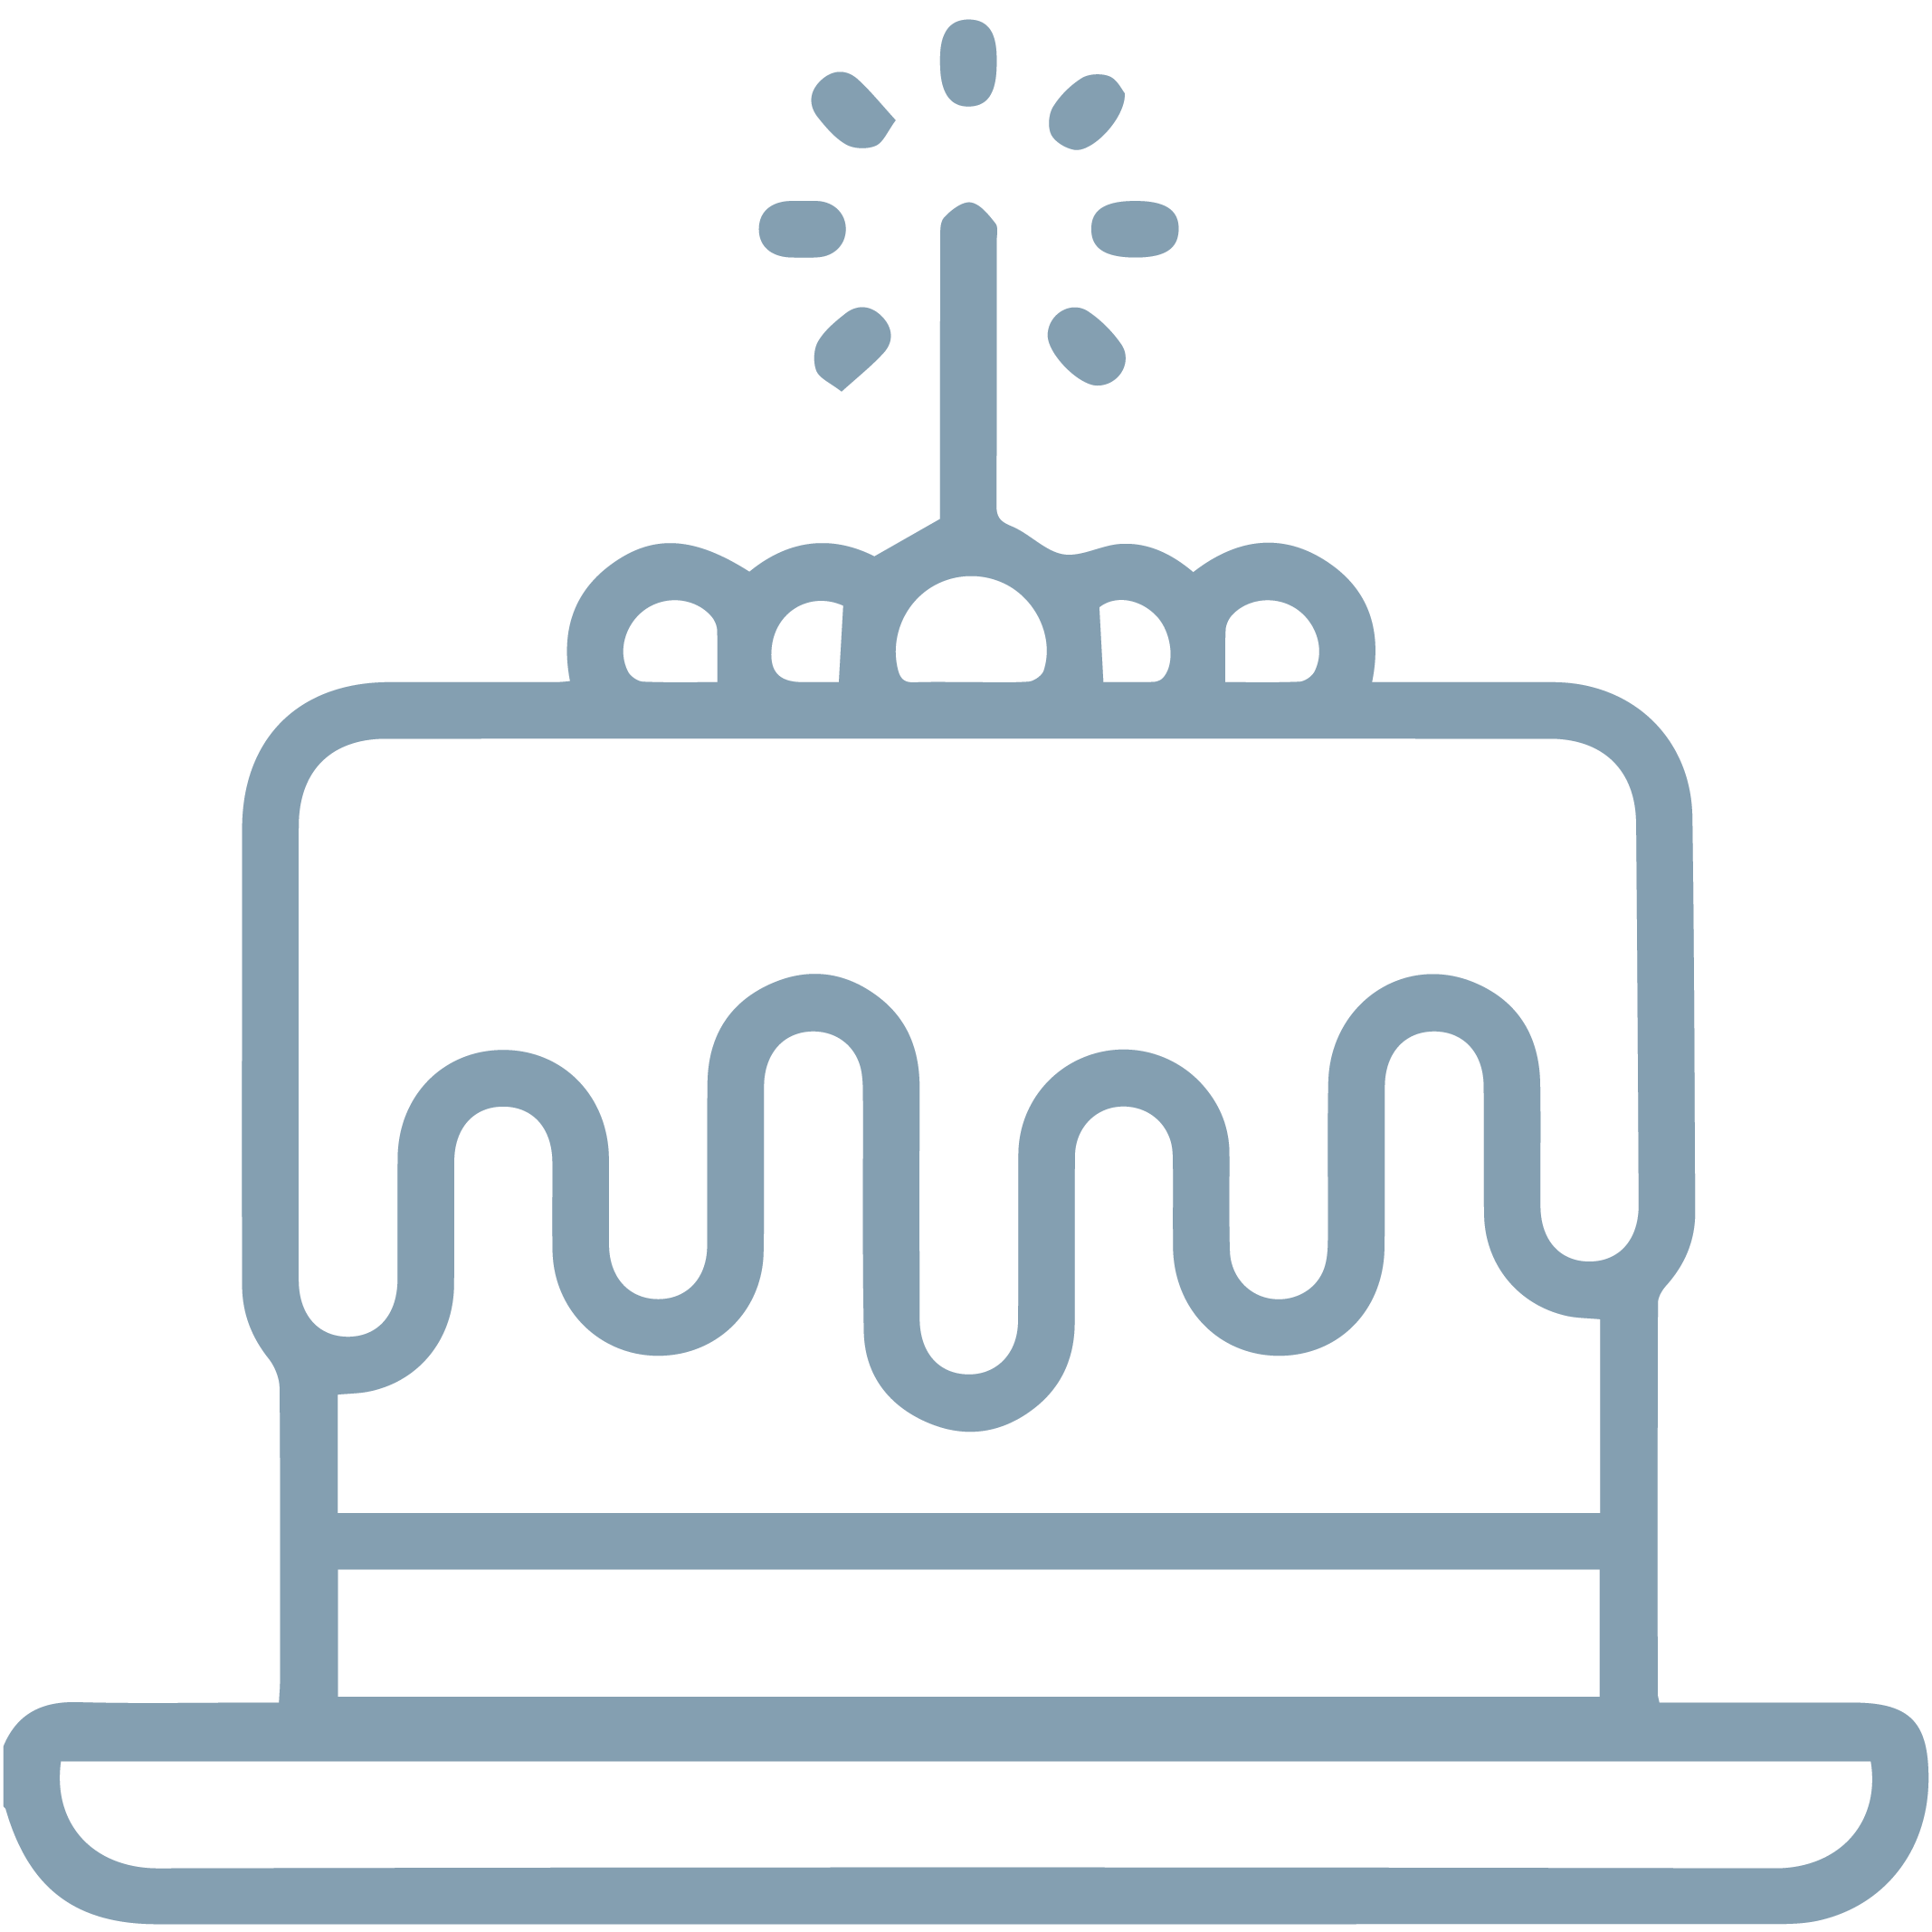 Make Your Own Birthday Cake